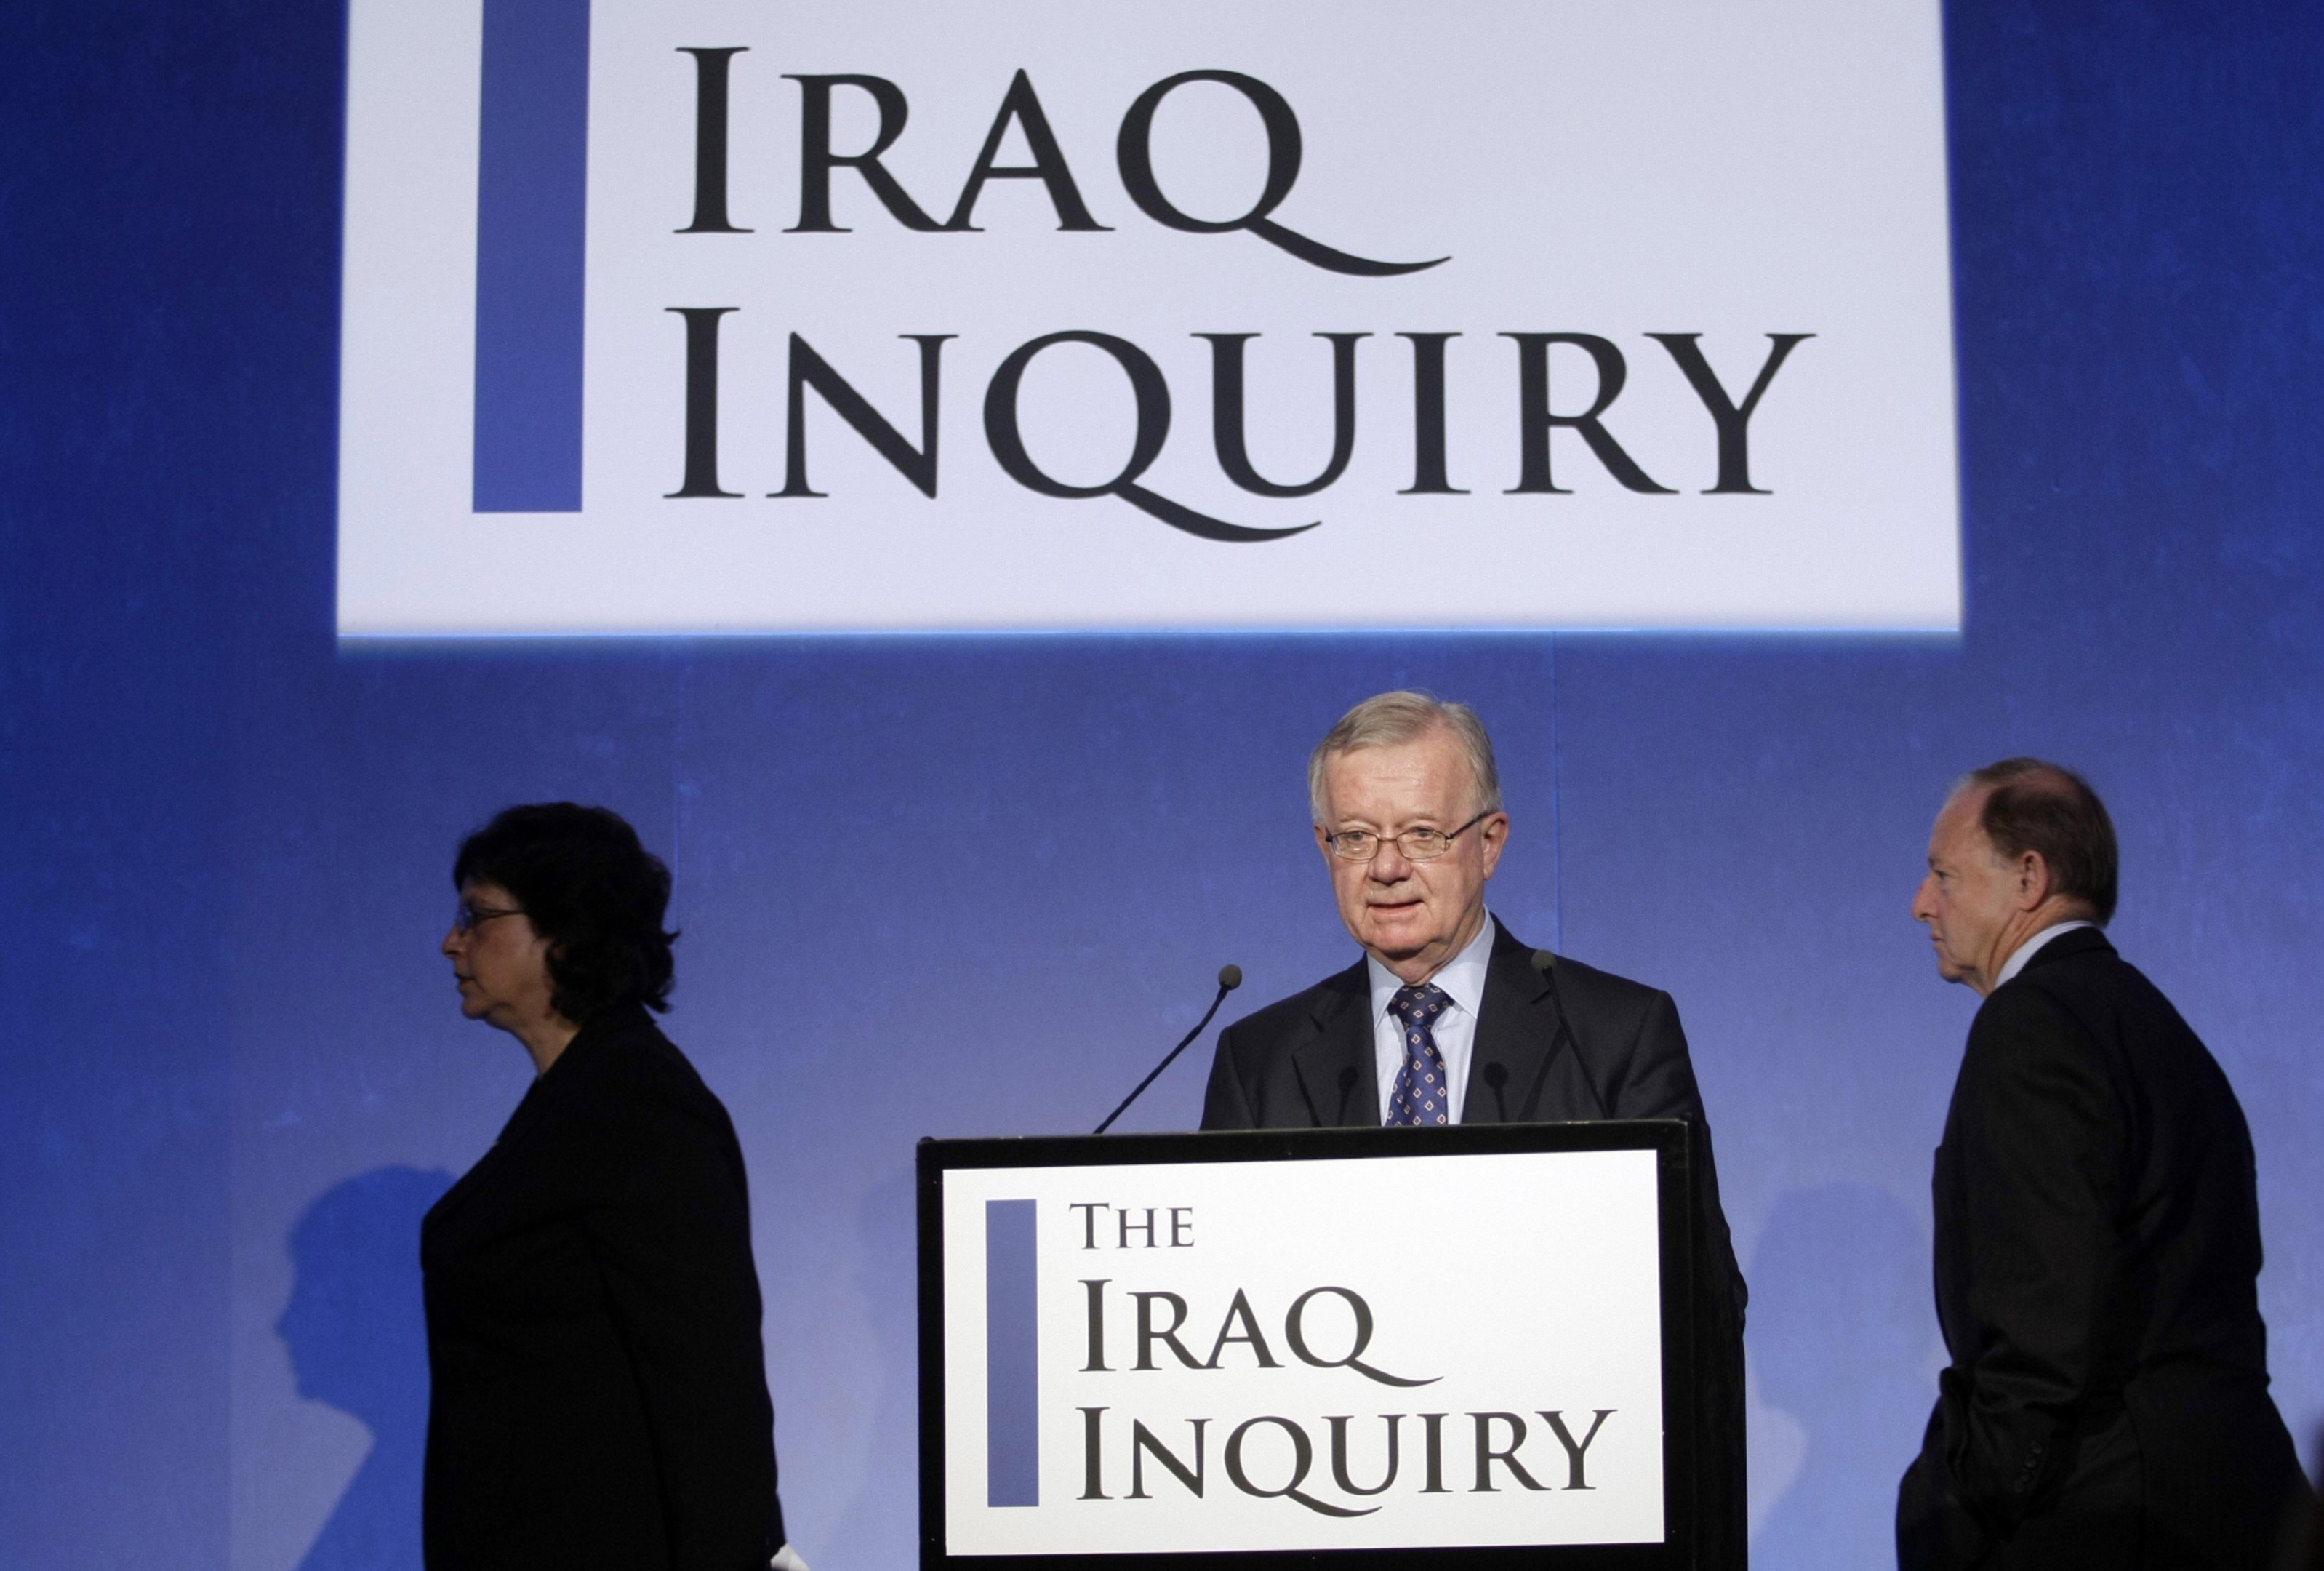 Sir John Chilcot presented the Iraq Inquiry report.